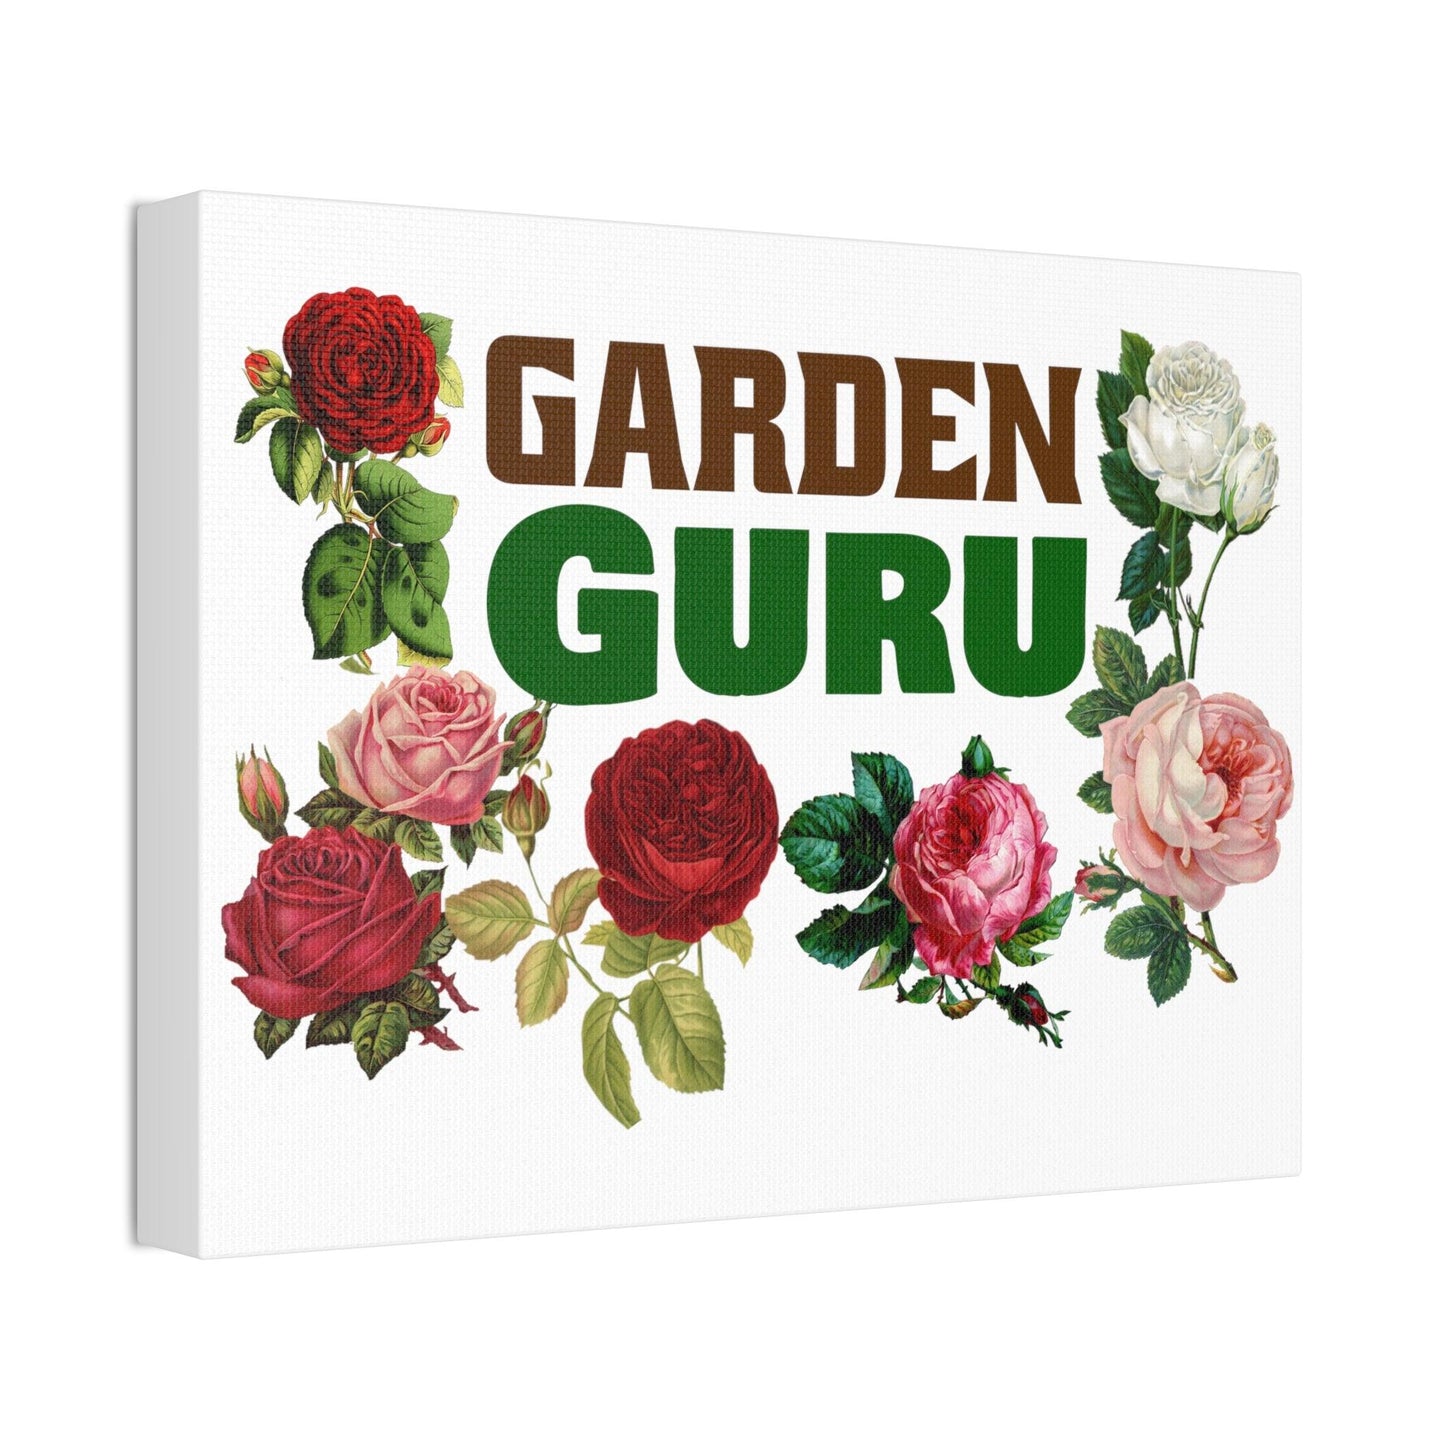 Garden Guru Garden Guru wall art - gift for garden lovers - plant lover gift nature lovers flower wall art